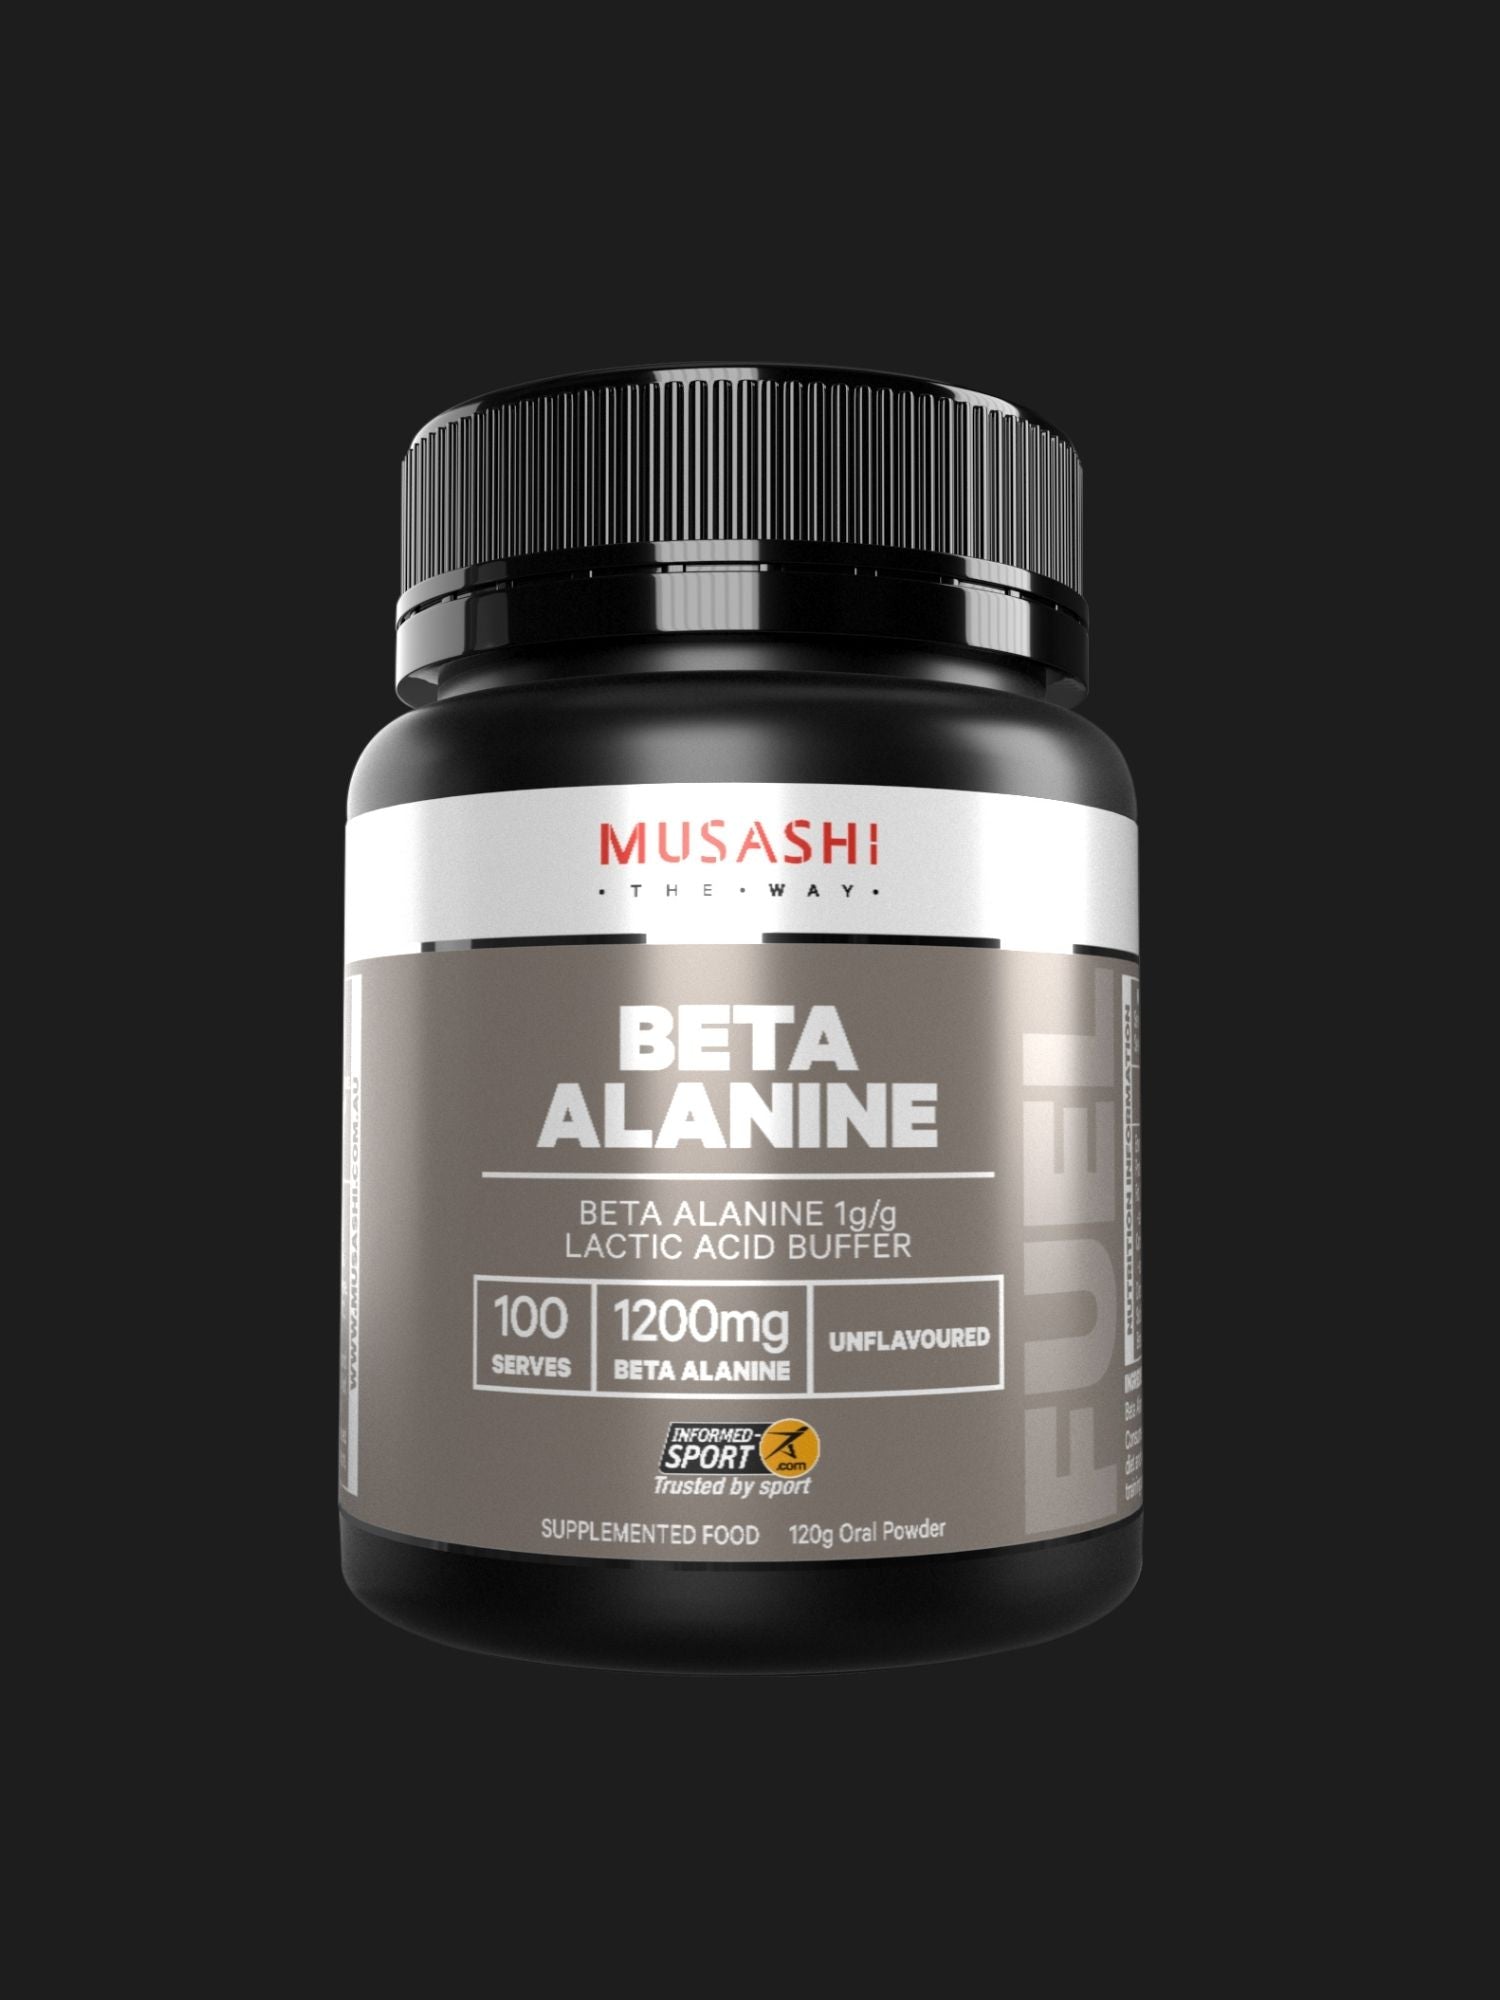 Buy Musashi Beta Alanine Unflavoured 120g Online at Chemist Warehouse®